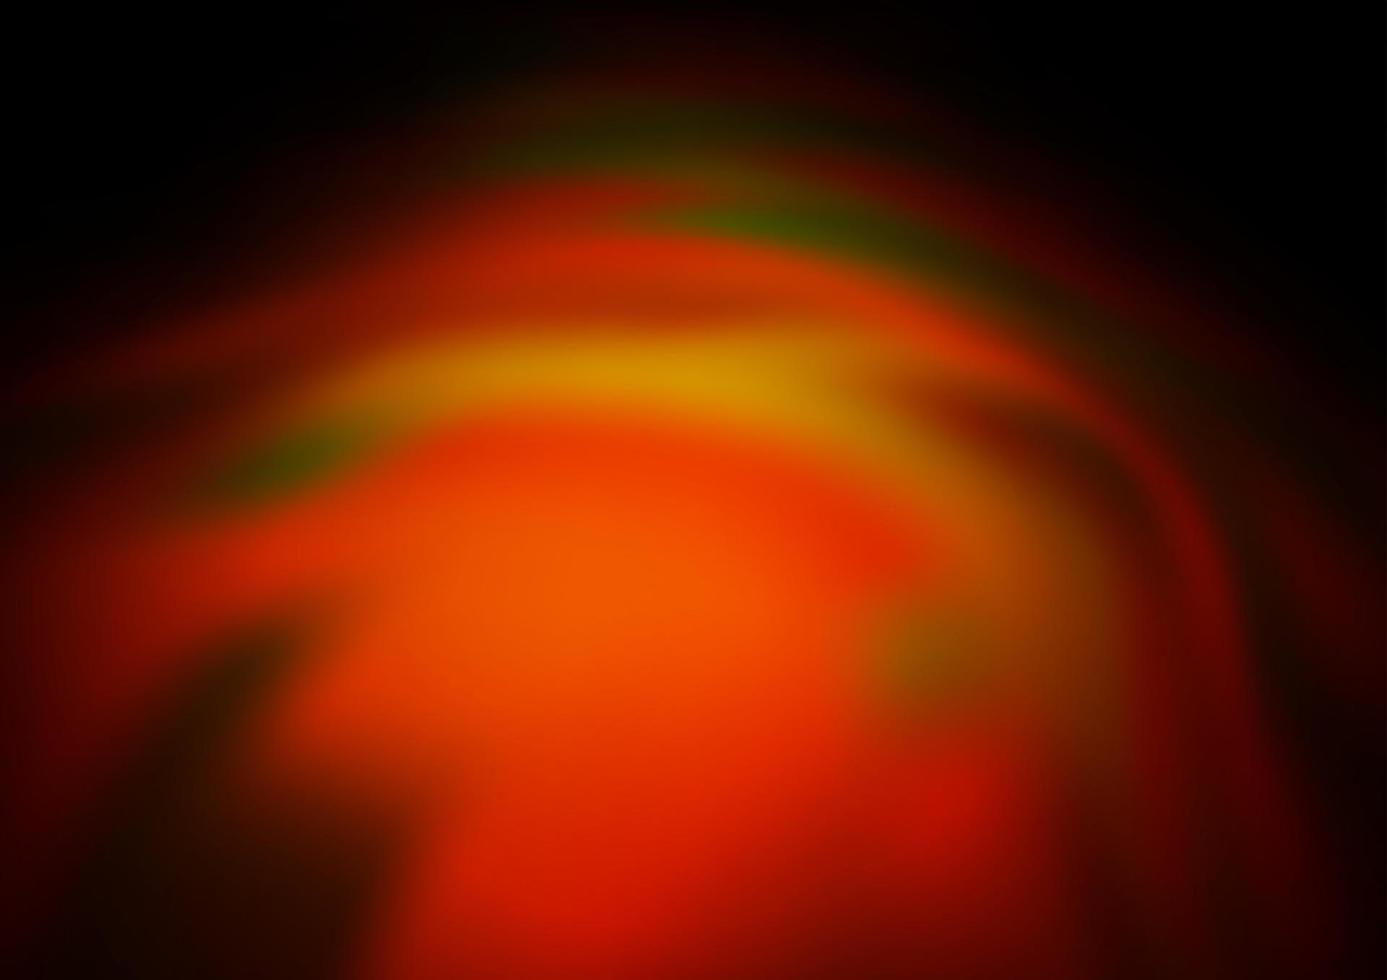 Dark Orange vector abstract background.